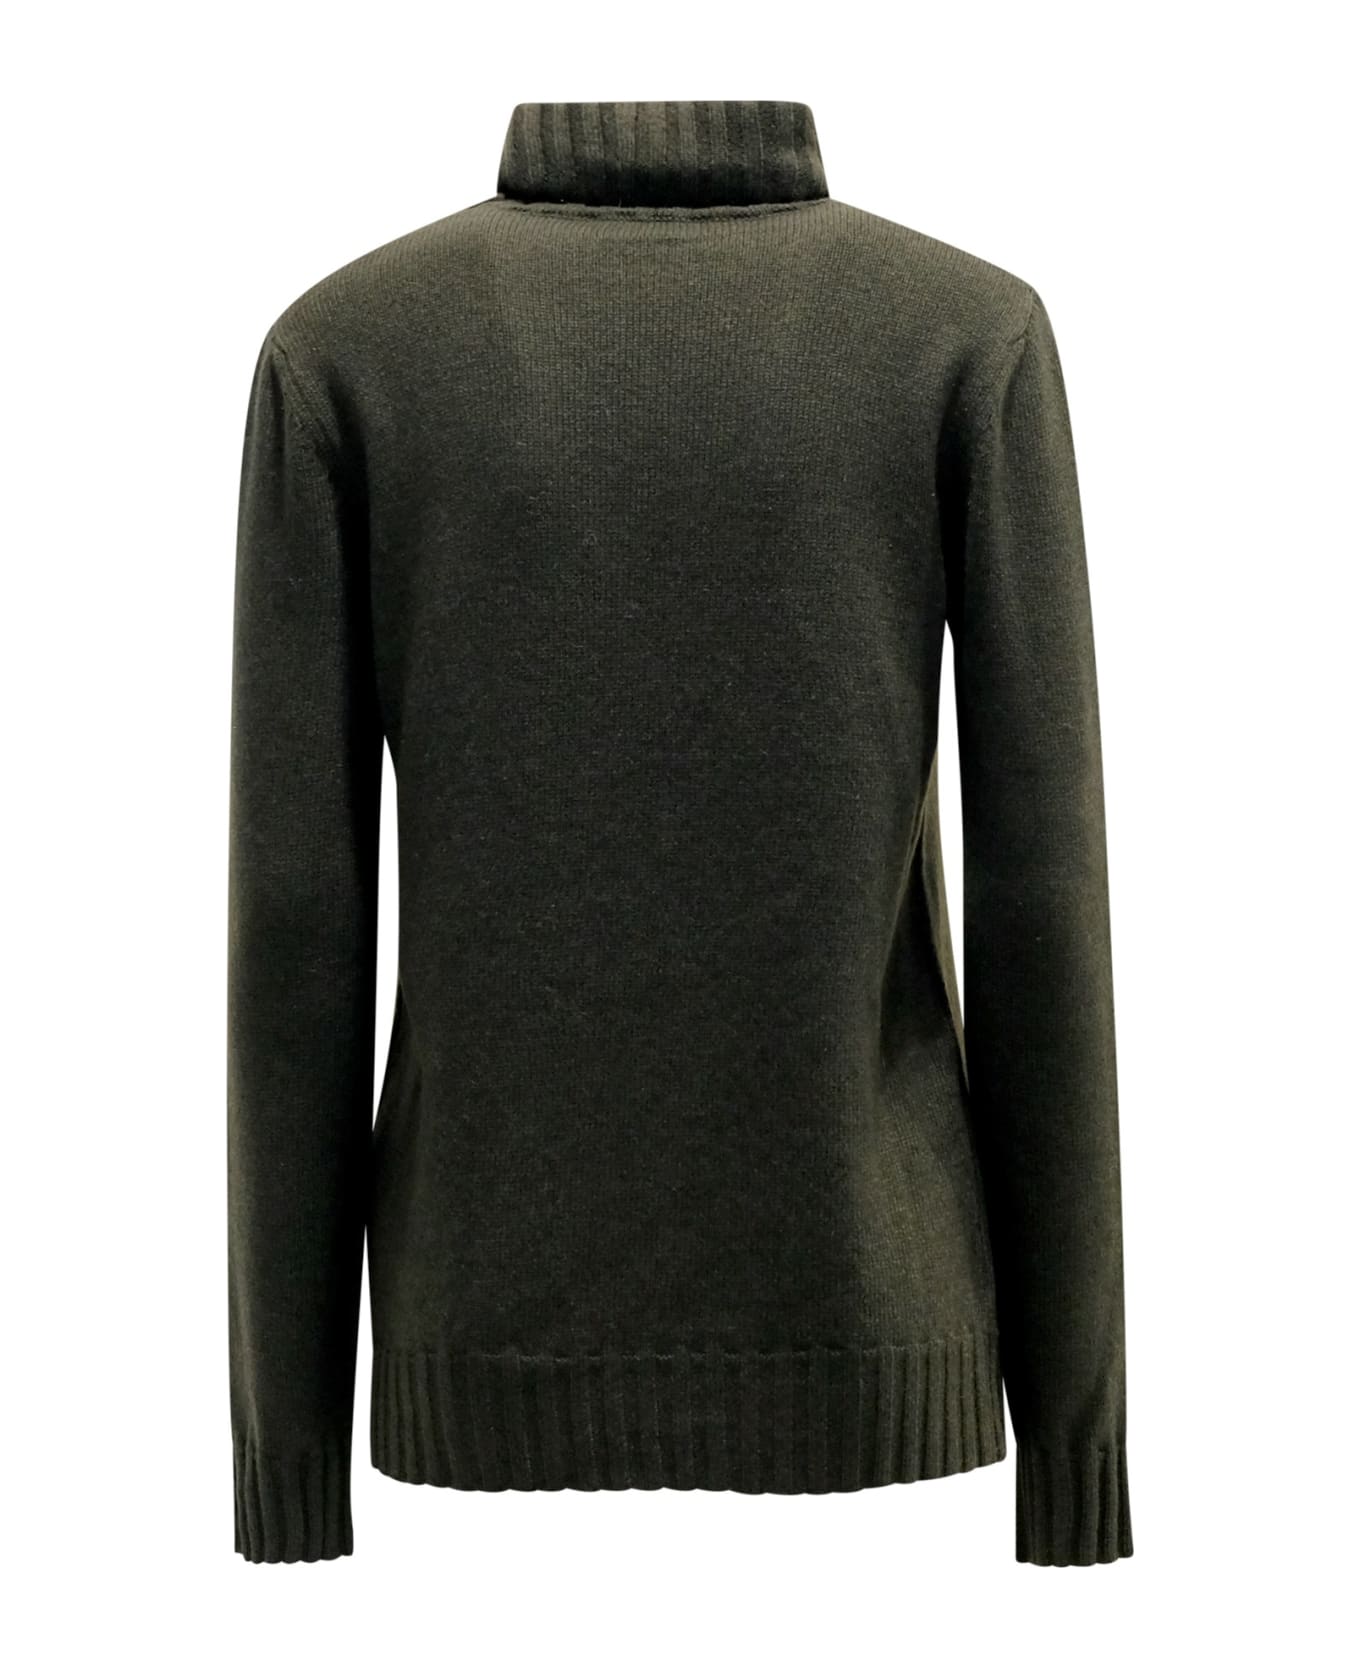 Parosh Lachloe Fantasy Olive Sweater ニットウェア